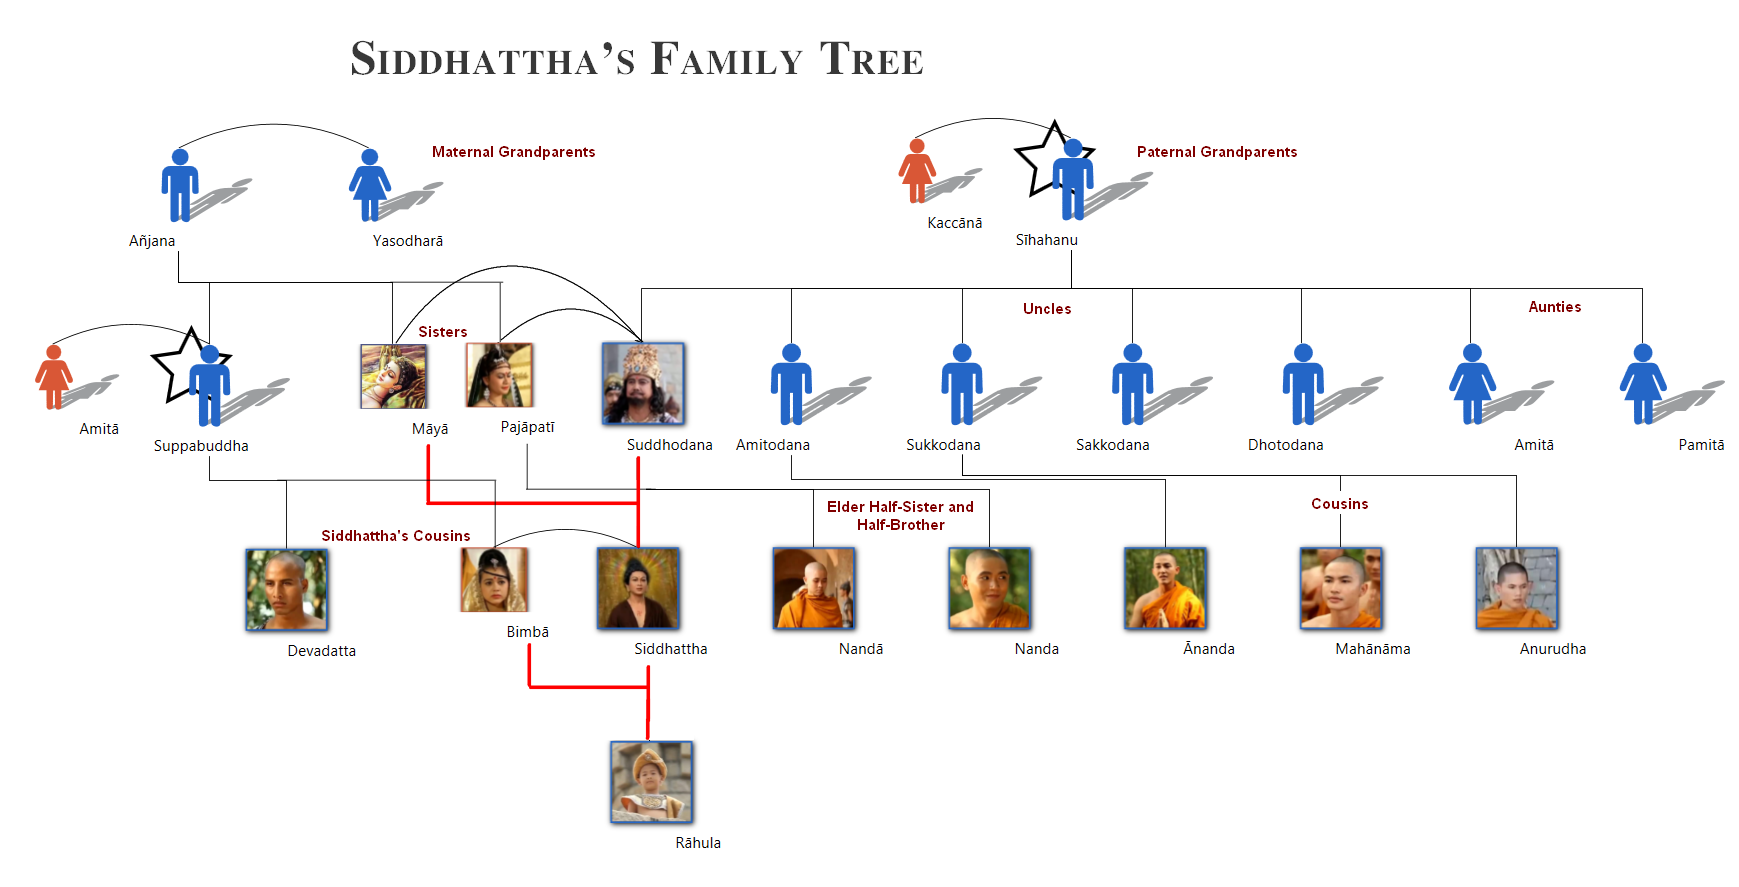 Siddhattha's Family Tree